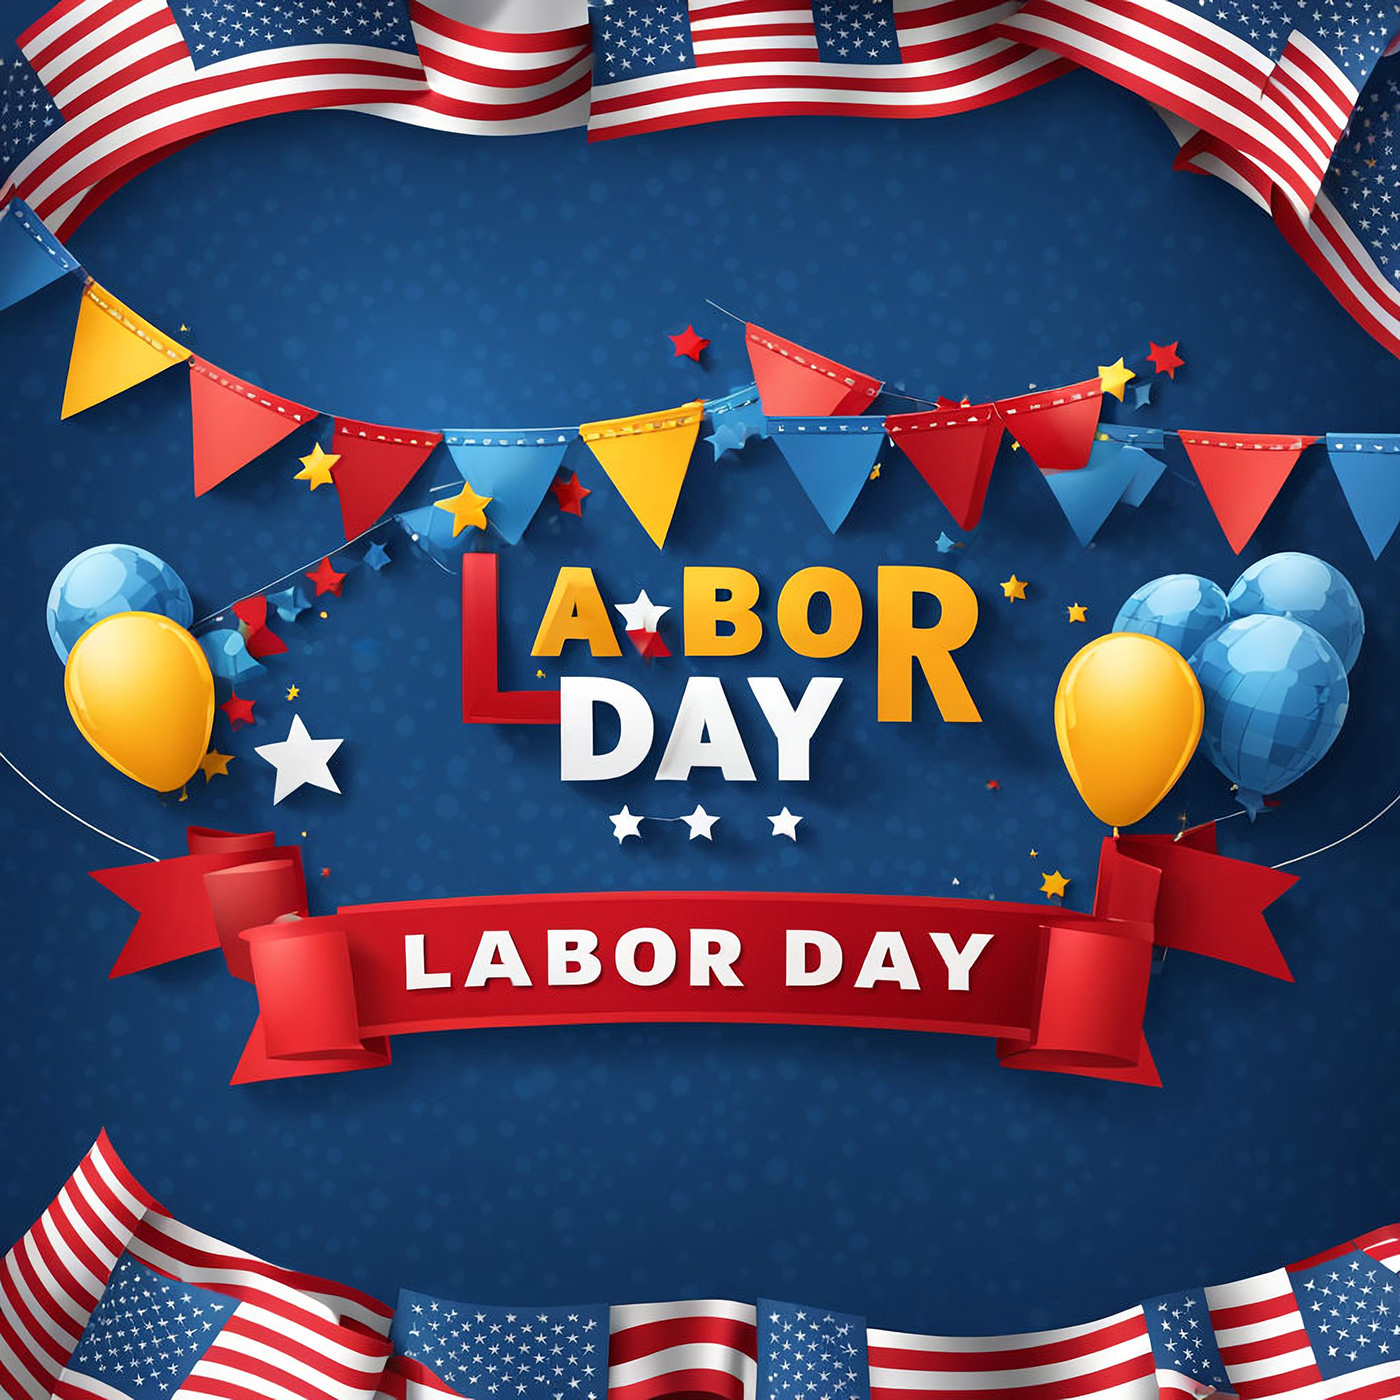 labor Labor Day may Day celebration design america worker ai Day struggle